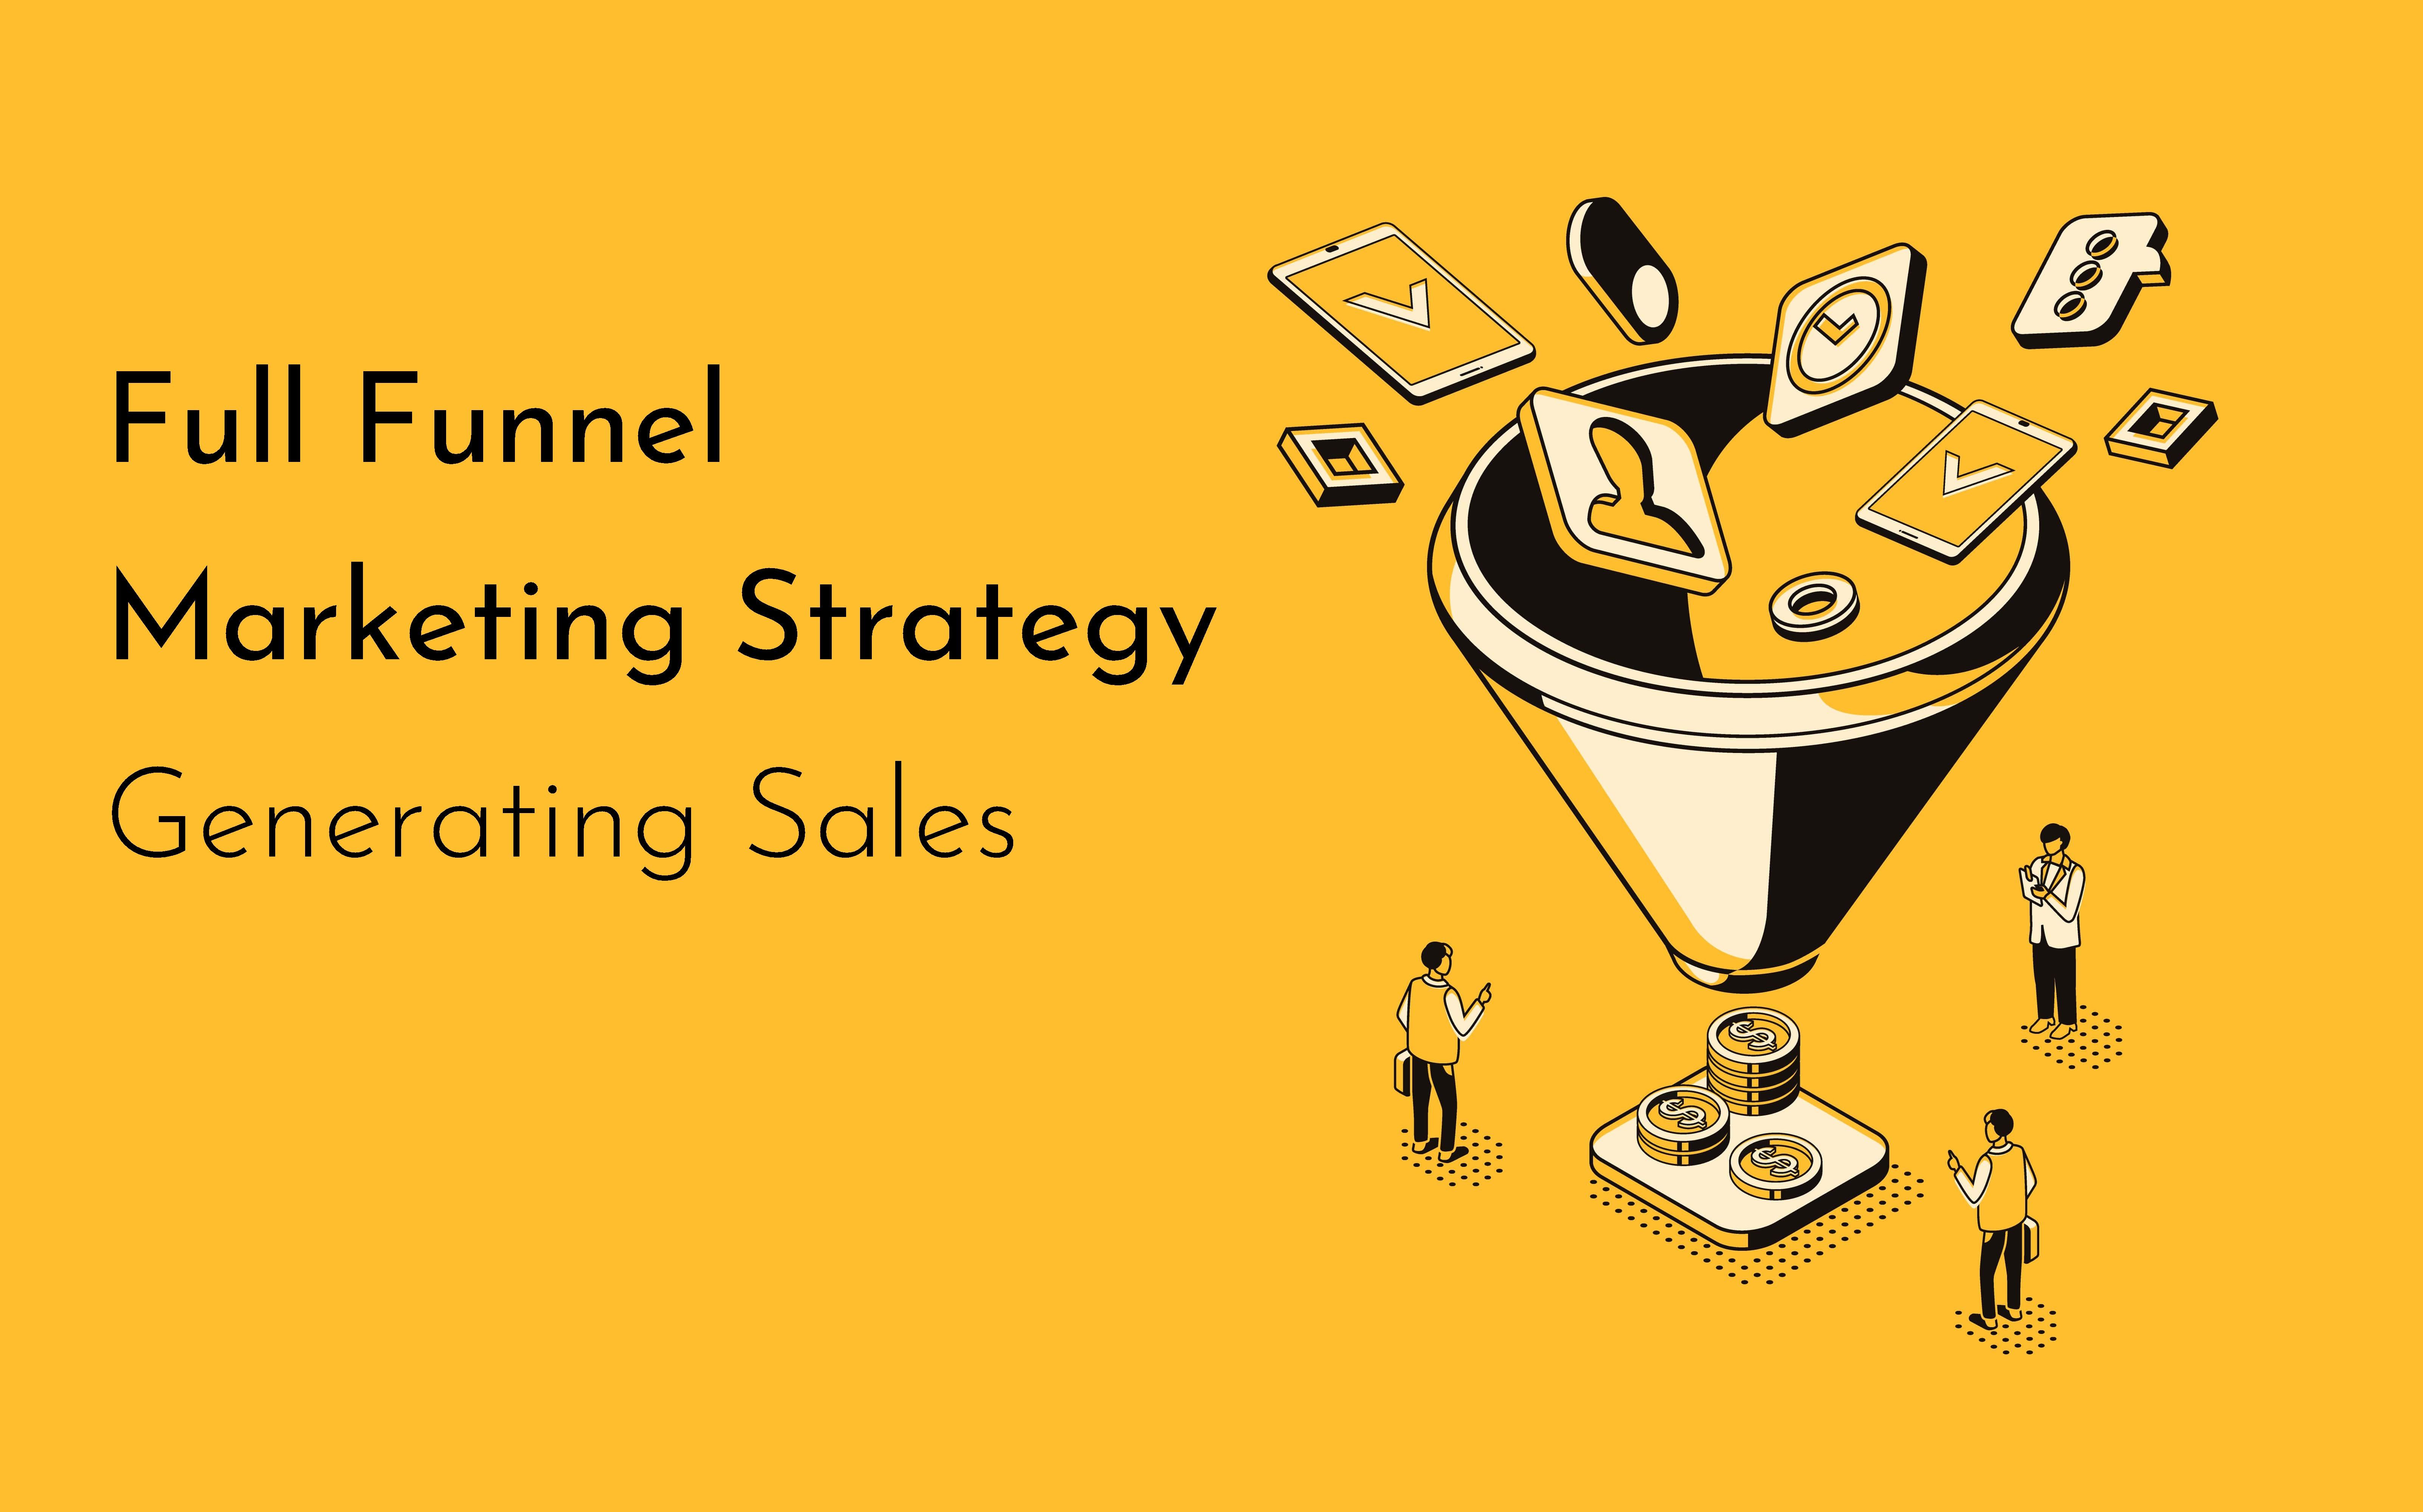 Full Funnel Marketing Strategy